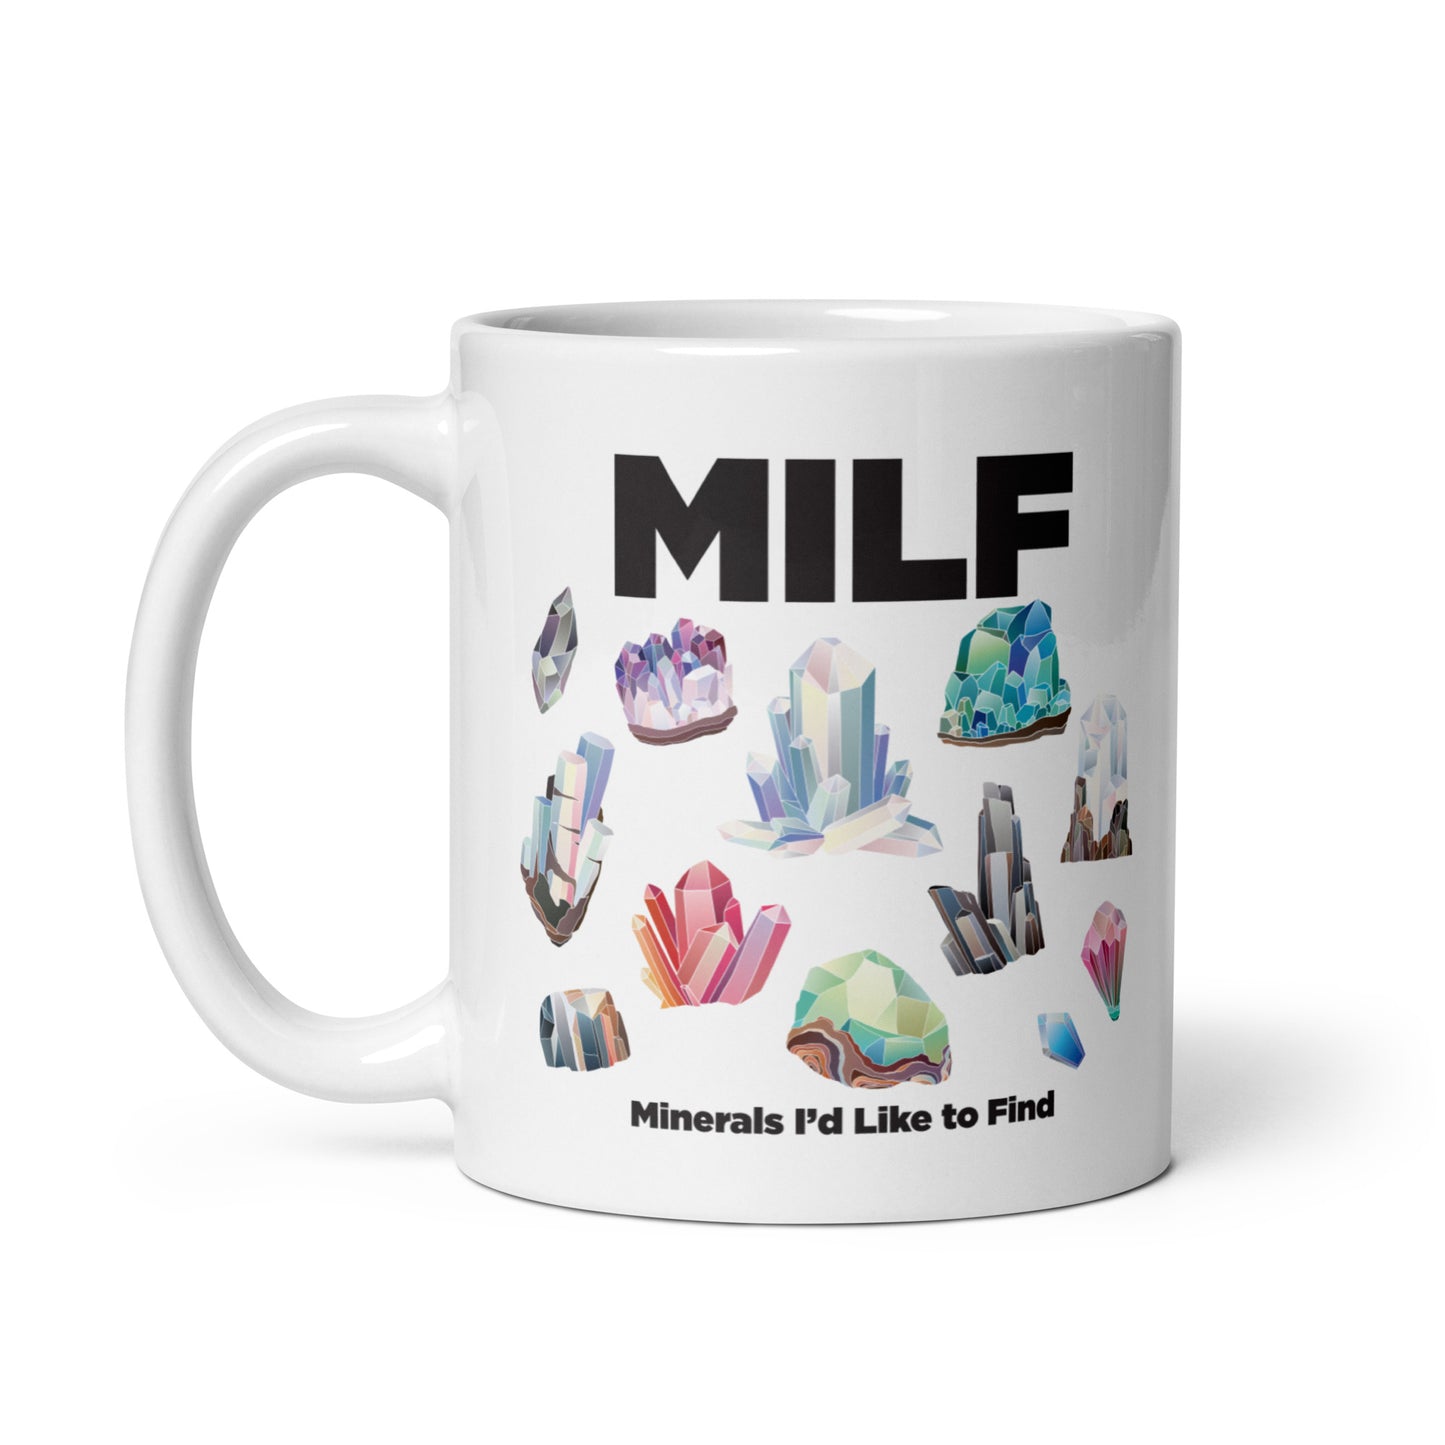 MILF Minerals I'd Like to Find mug